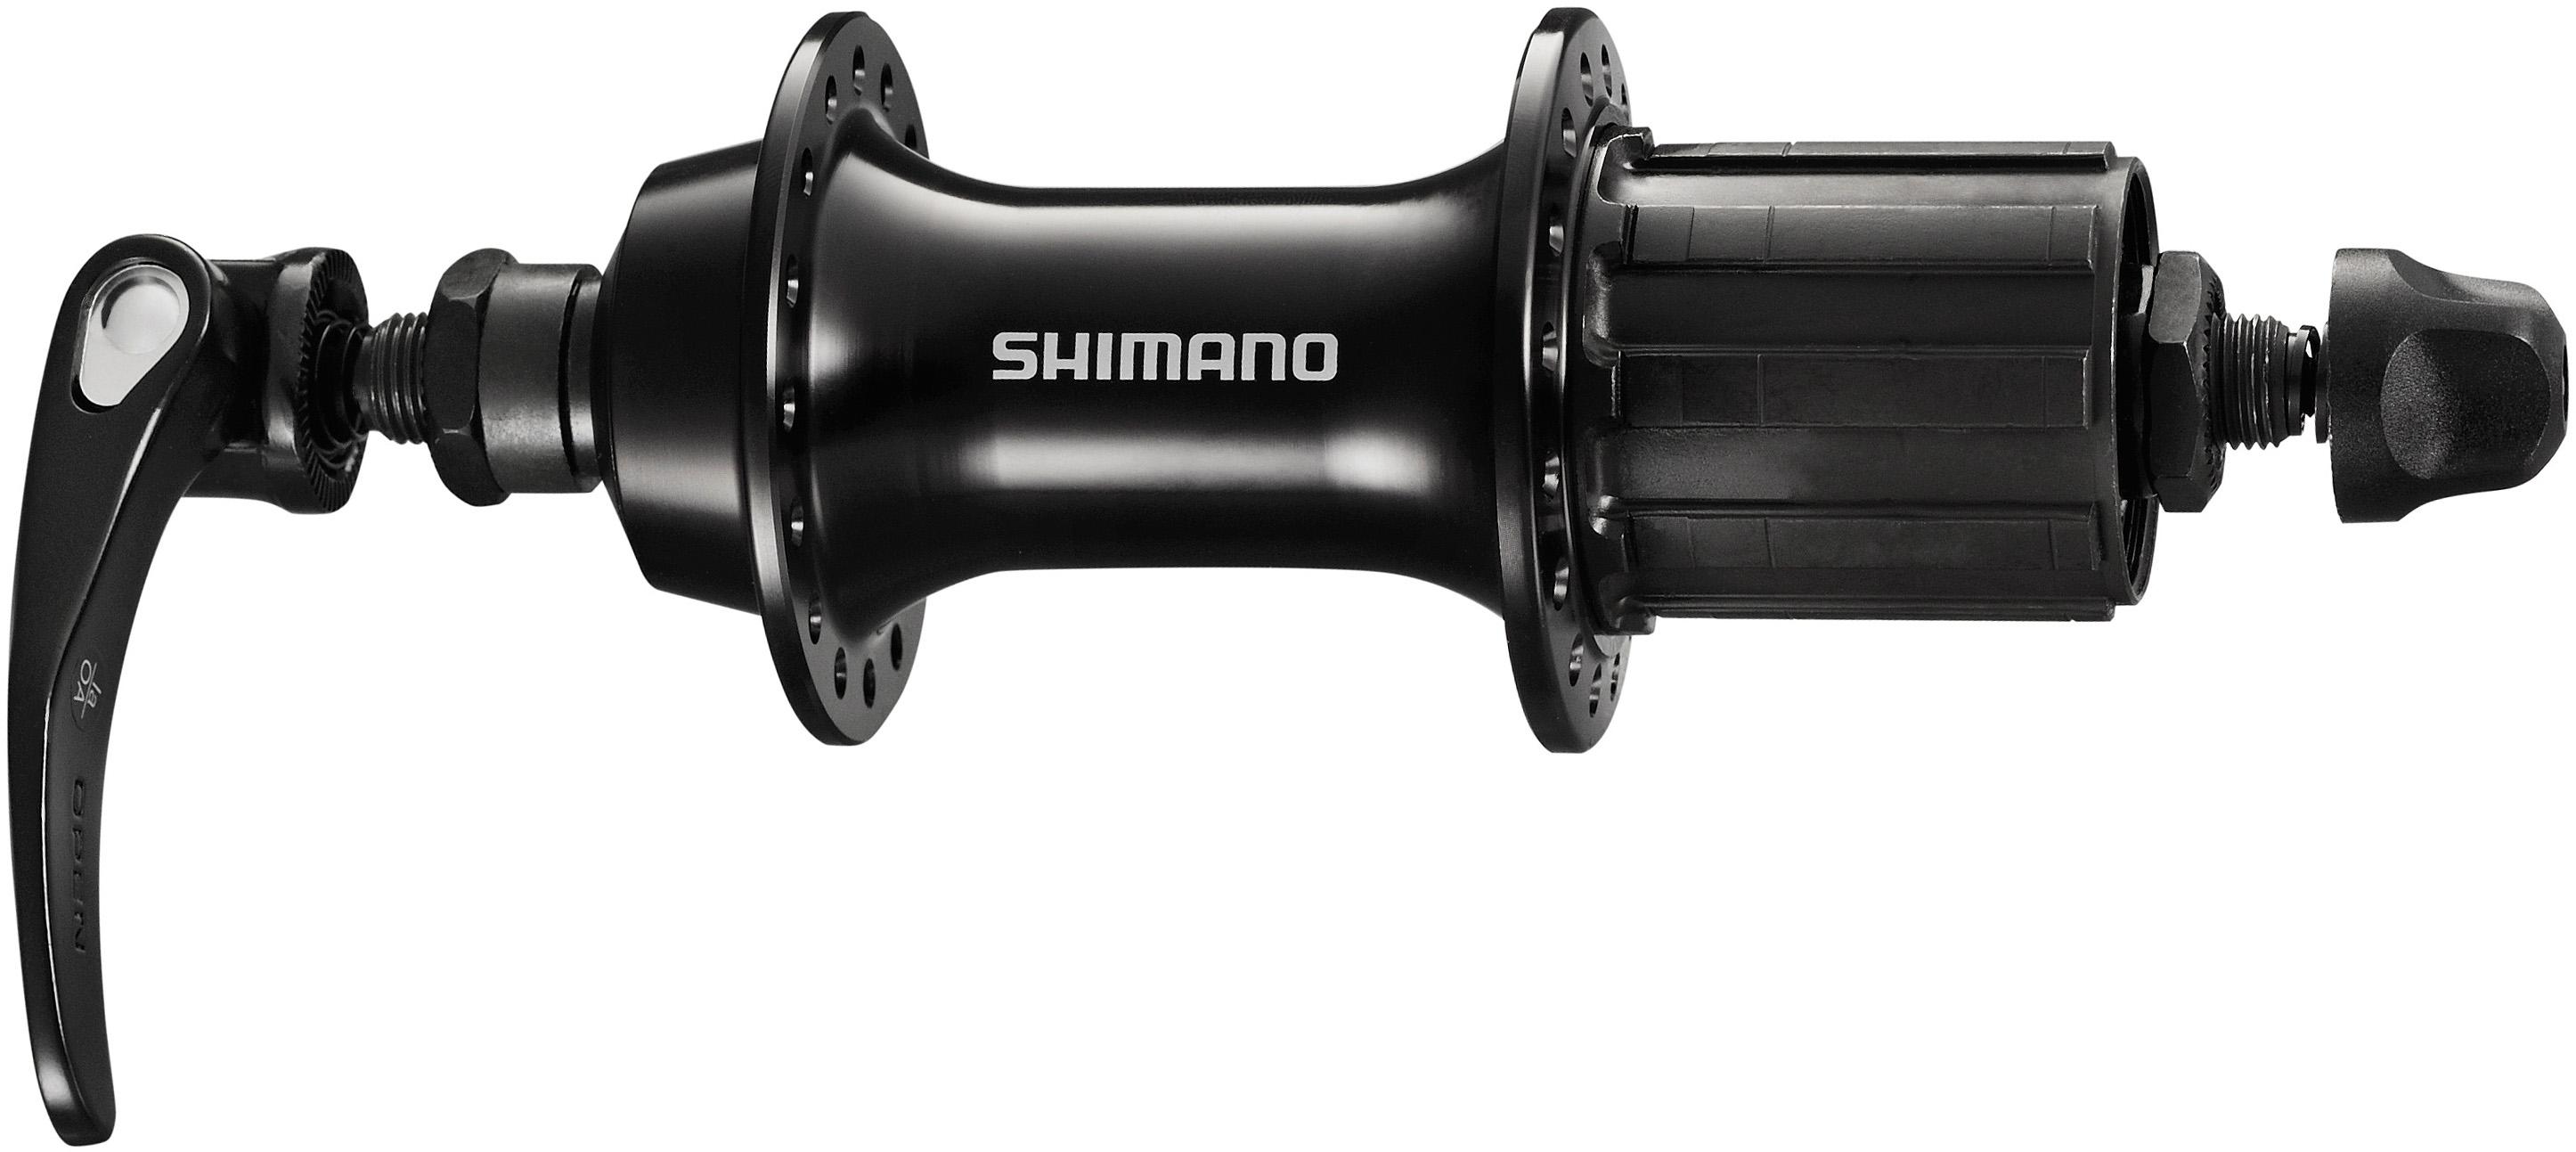 Shimano Sora Rs300 Rear Hub - Black